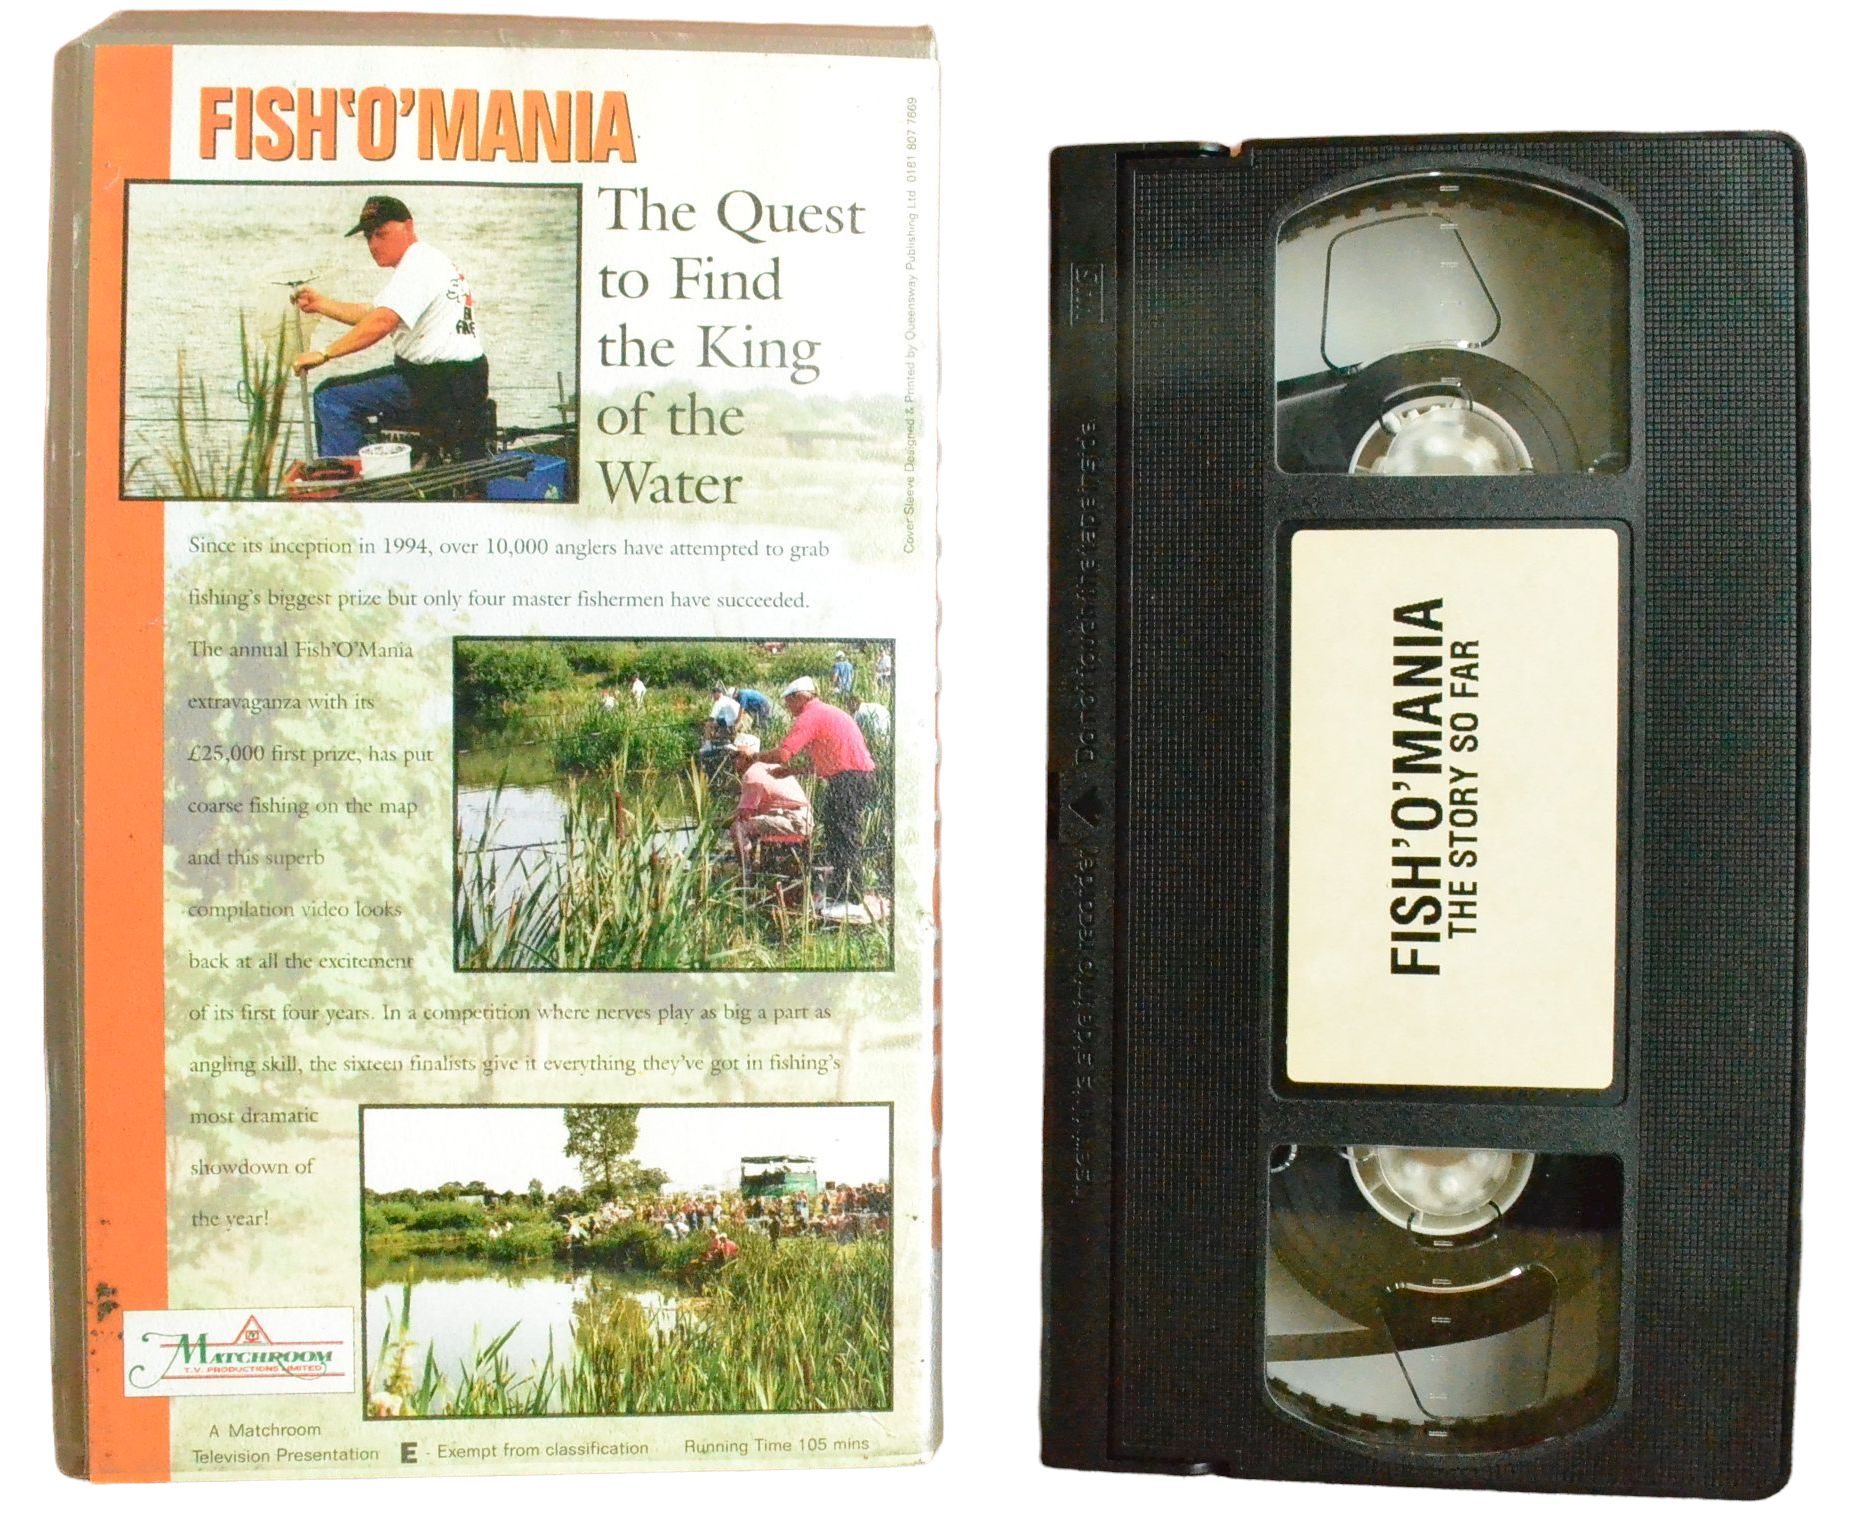 Fish 'O' Mania: The Story So Far - A Matchroom Television Presentation - Pal VHS-